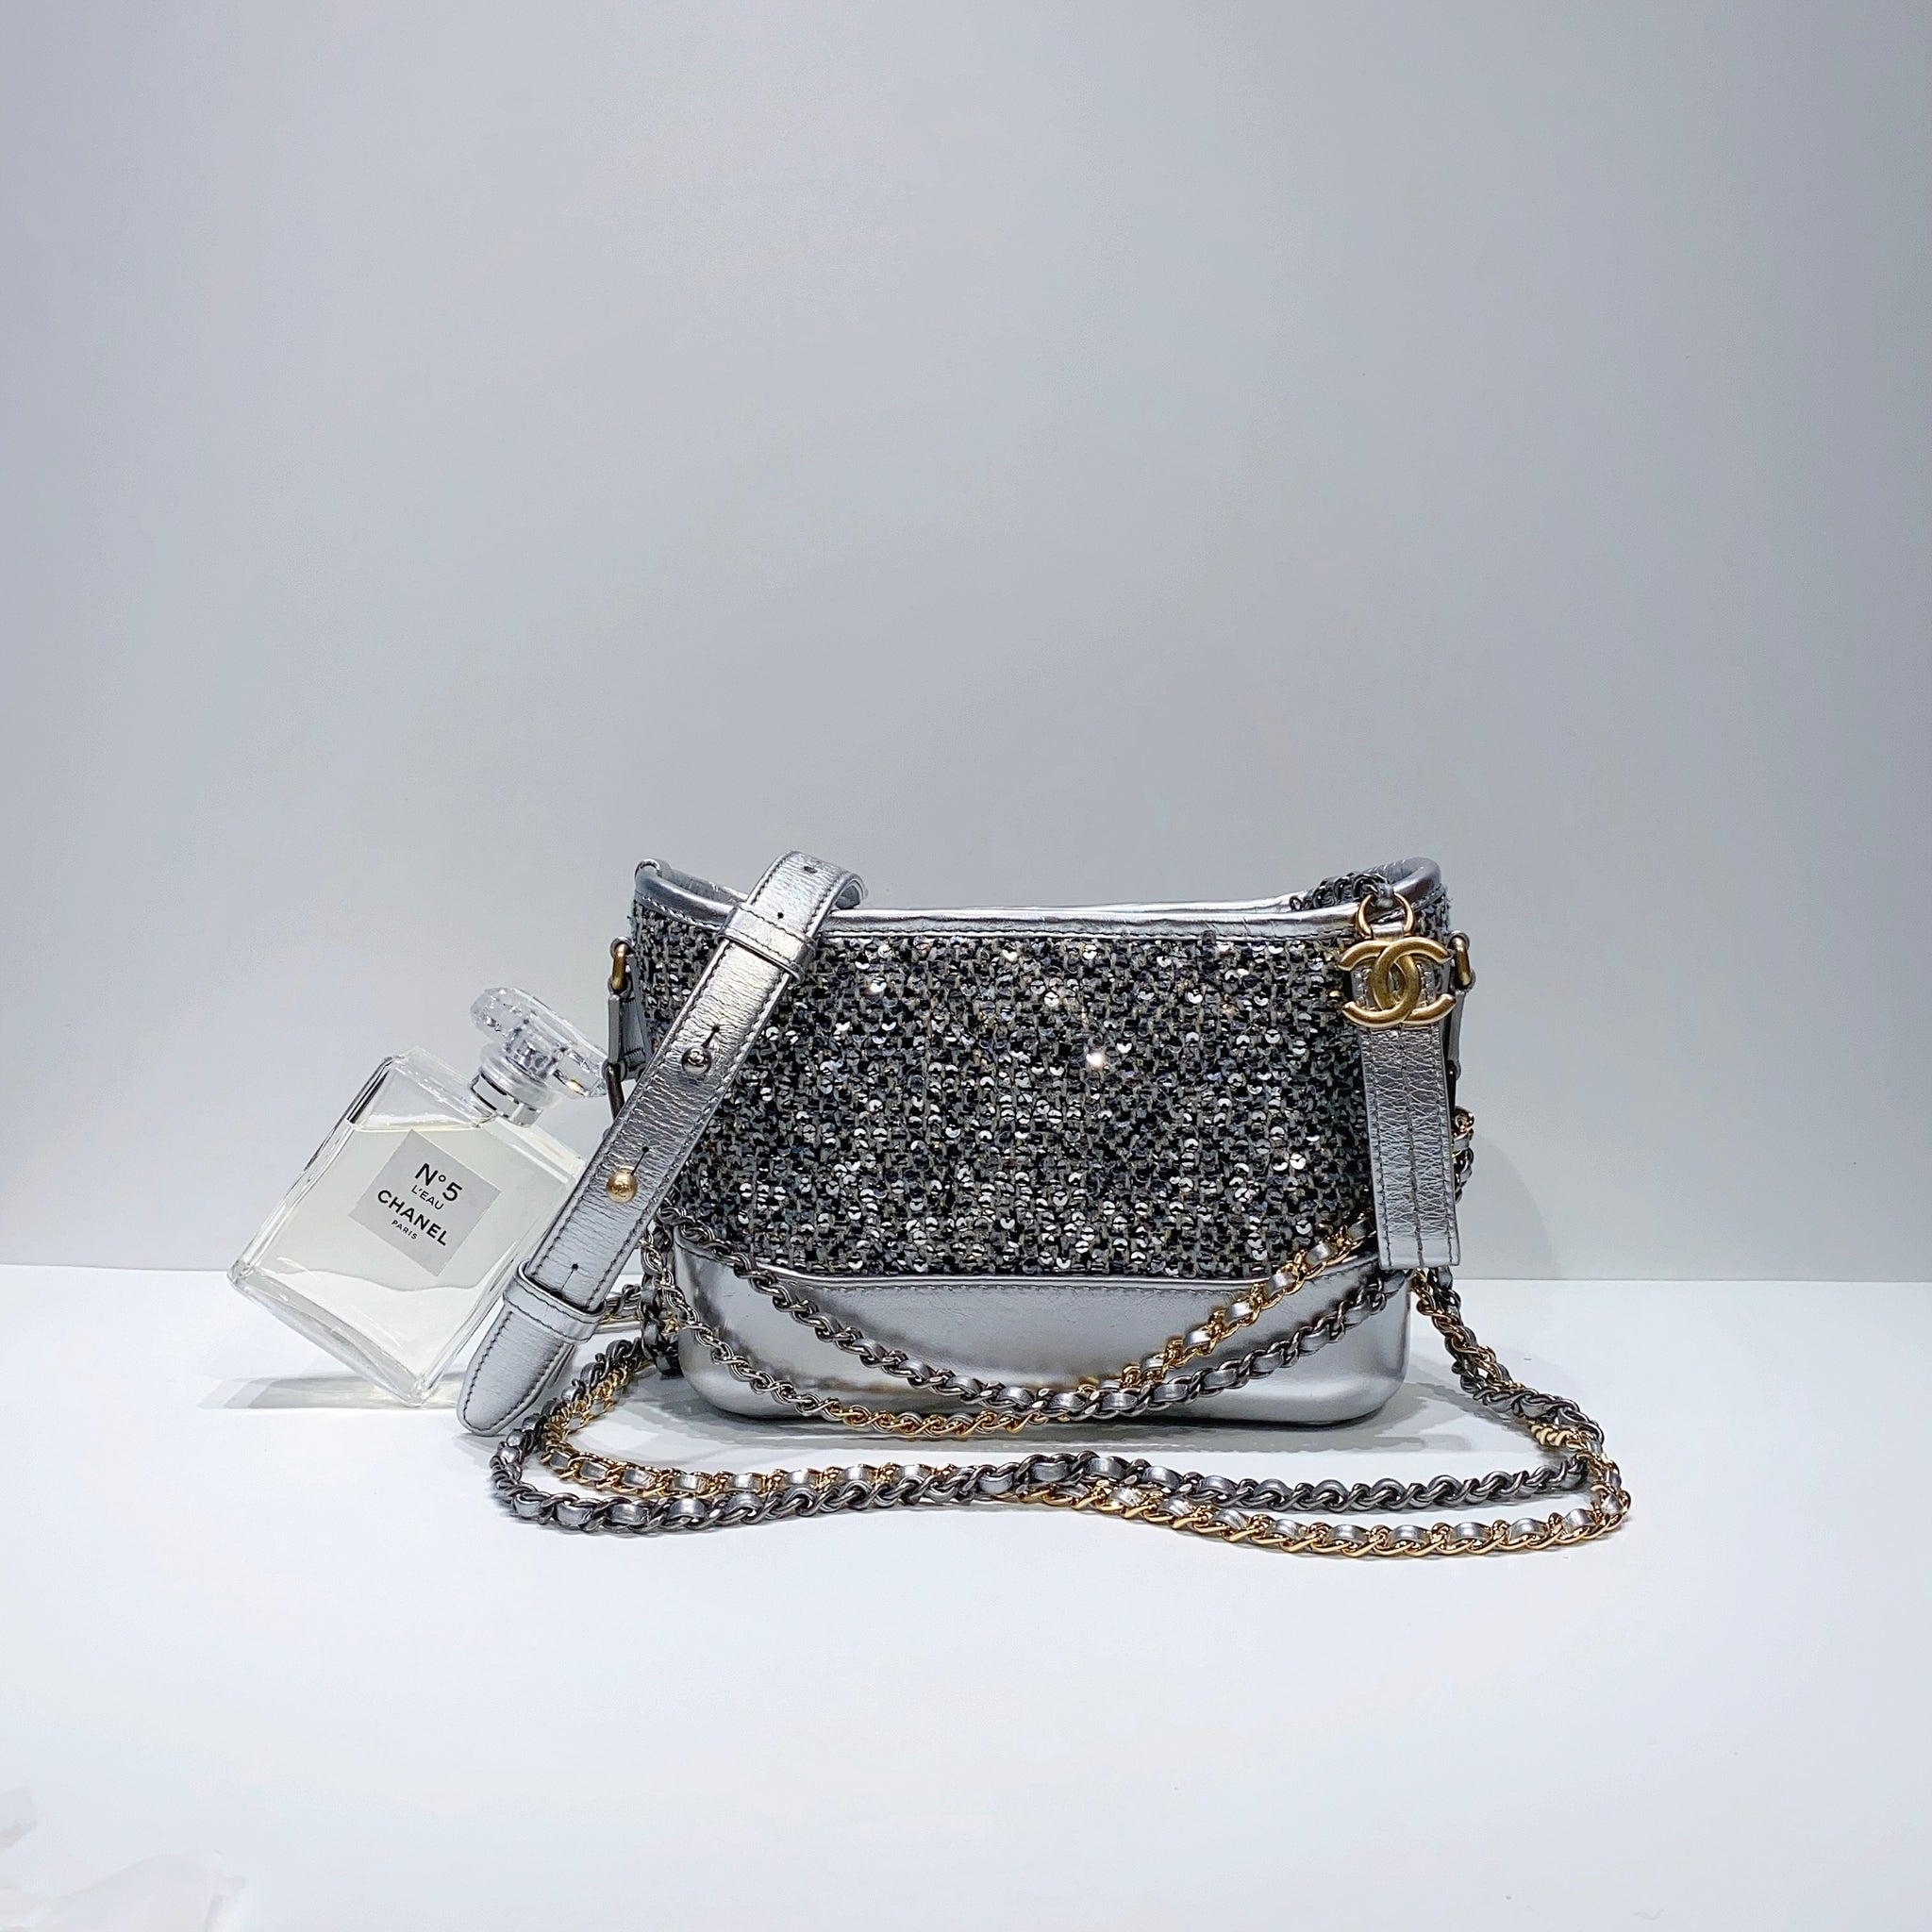 Chanel Gabrielle Sequins Small Hobo Shoulder Bag Blue/White